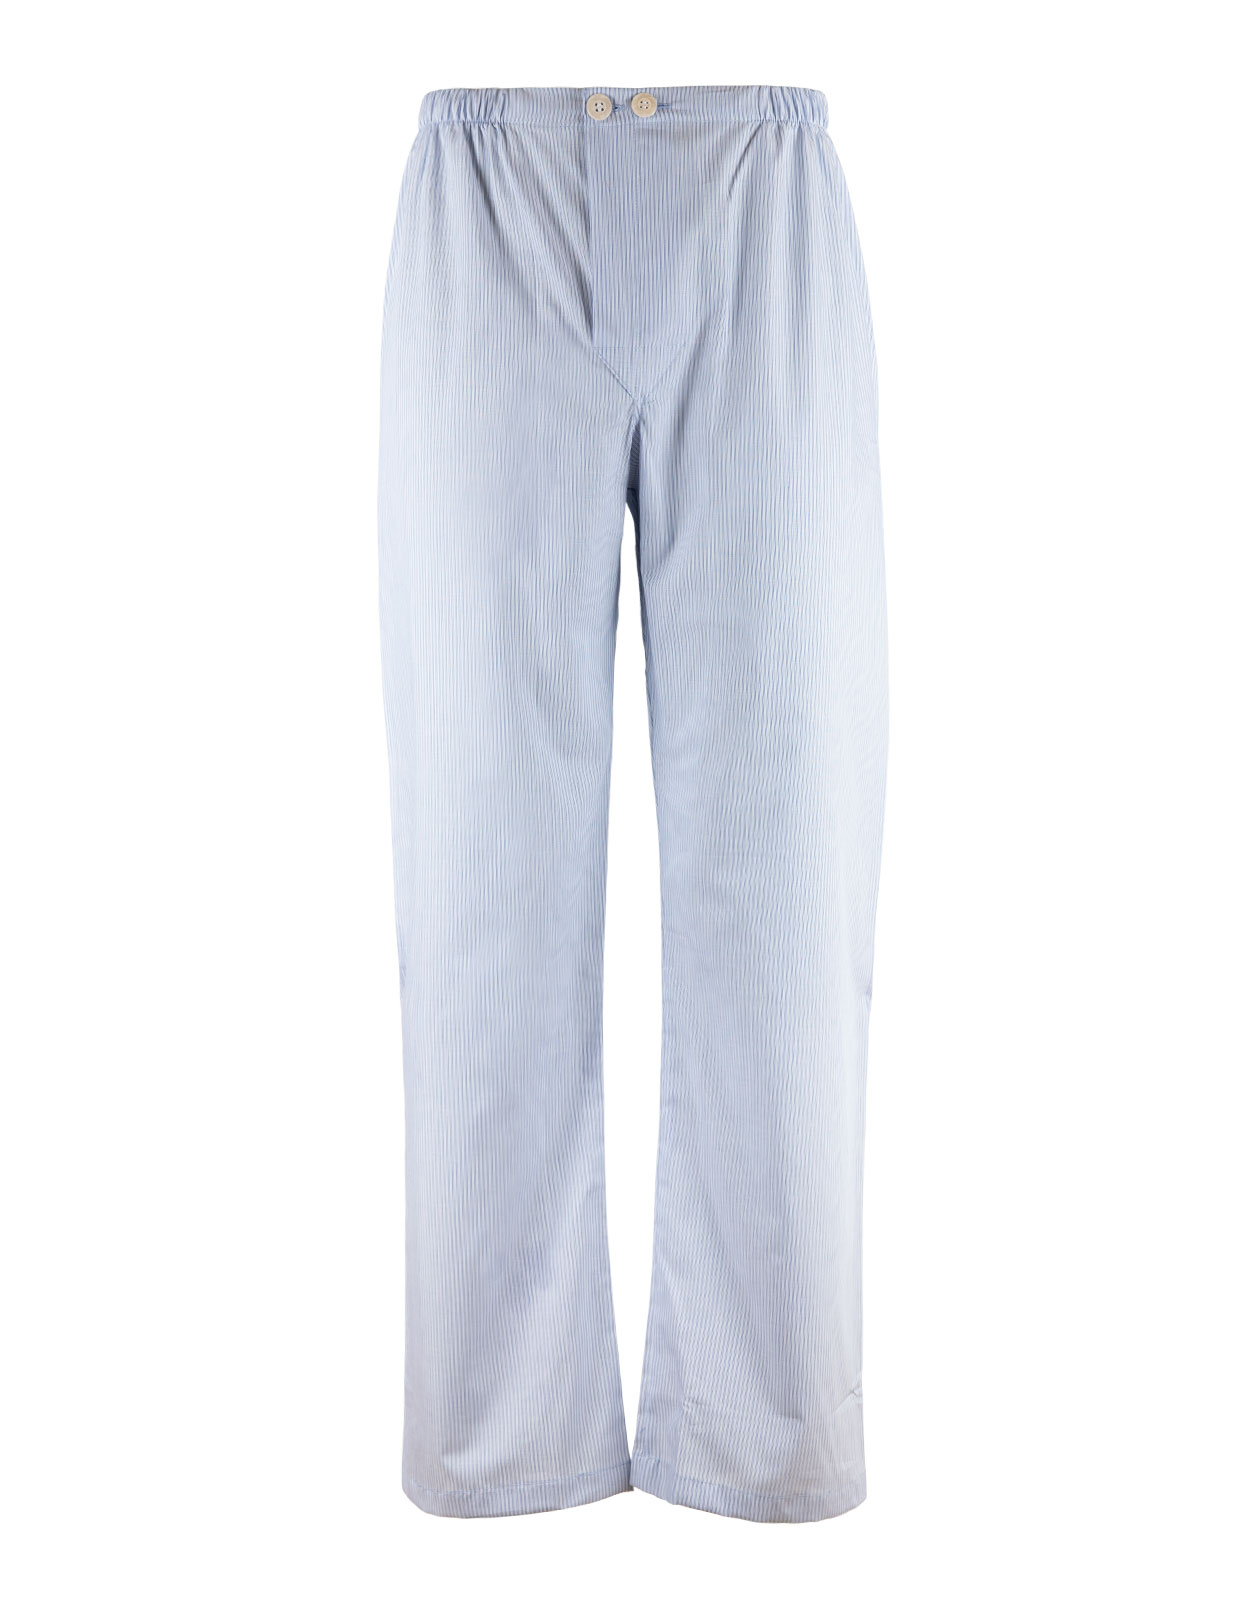 Saville Pyjamas Blå Stl 48